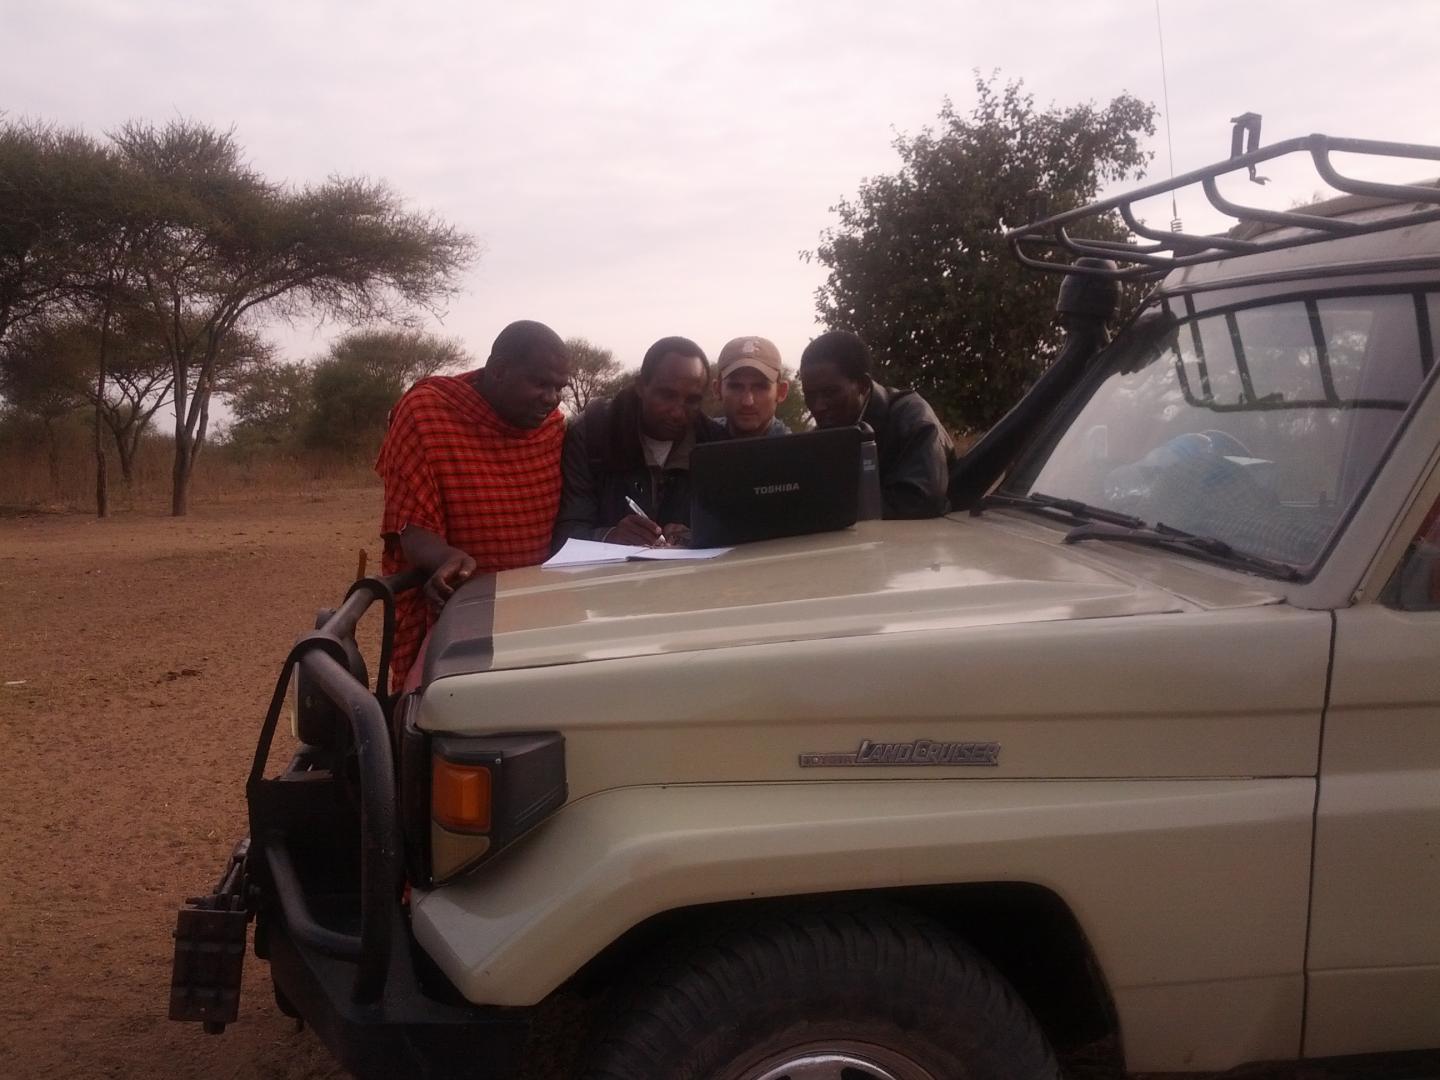 Working with the Maasai